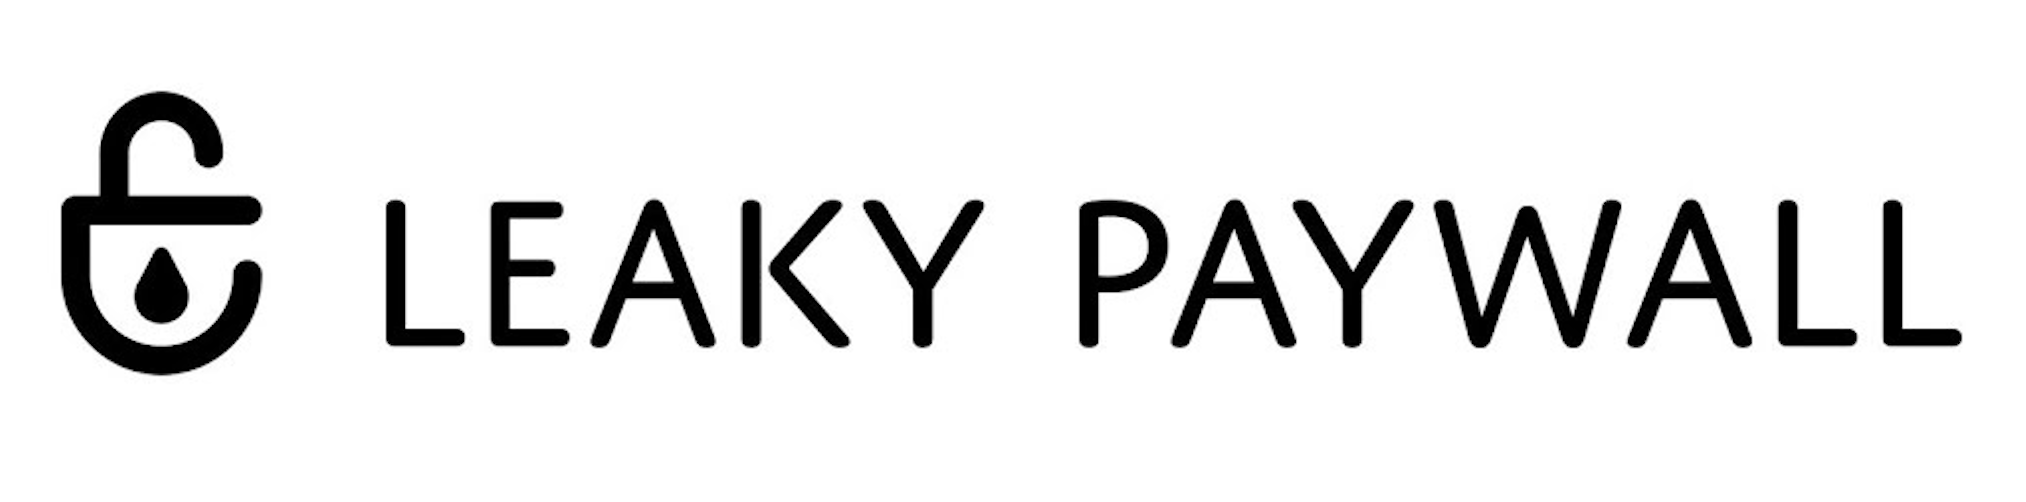 Leaky Paywall logo